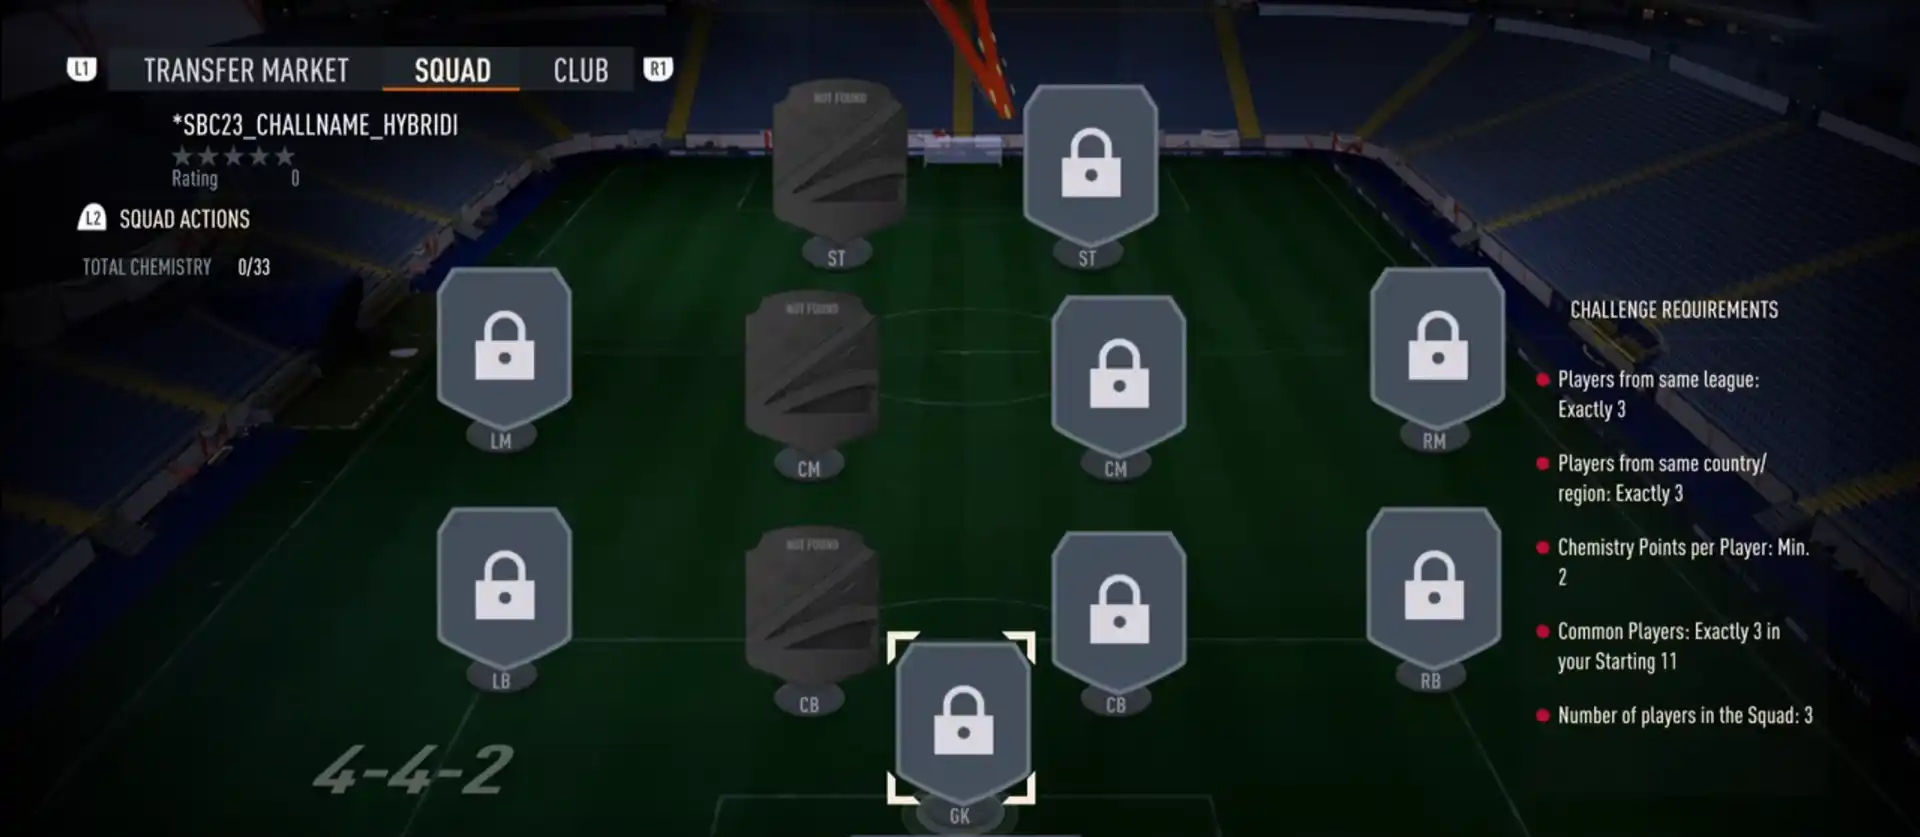 FIFA 23: WEBAPP TRANSFERMARKT FREISCHALTEN✓😍STARTER SBC'S⁉️ 